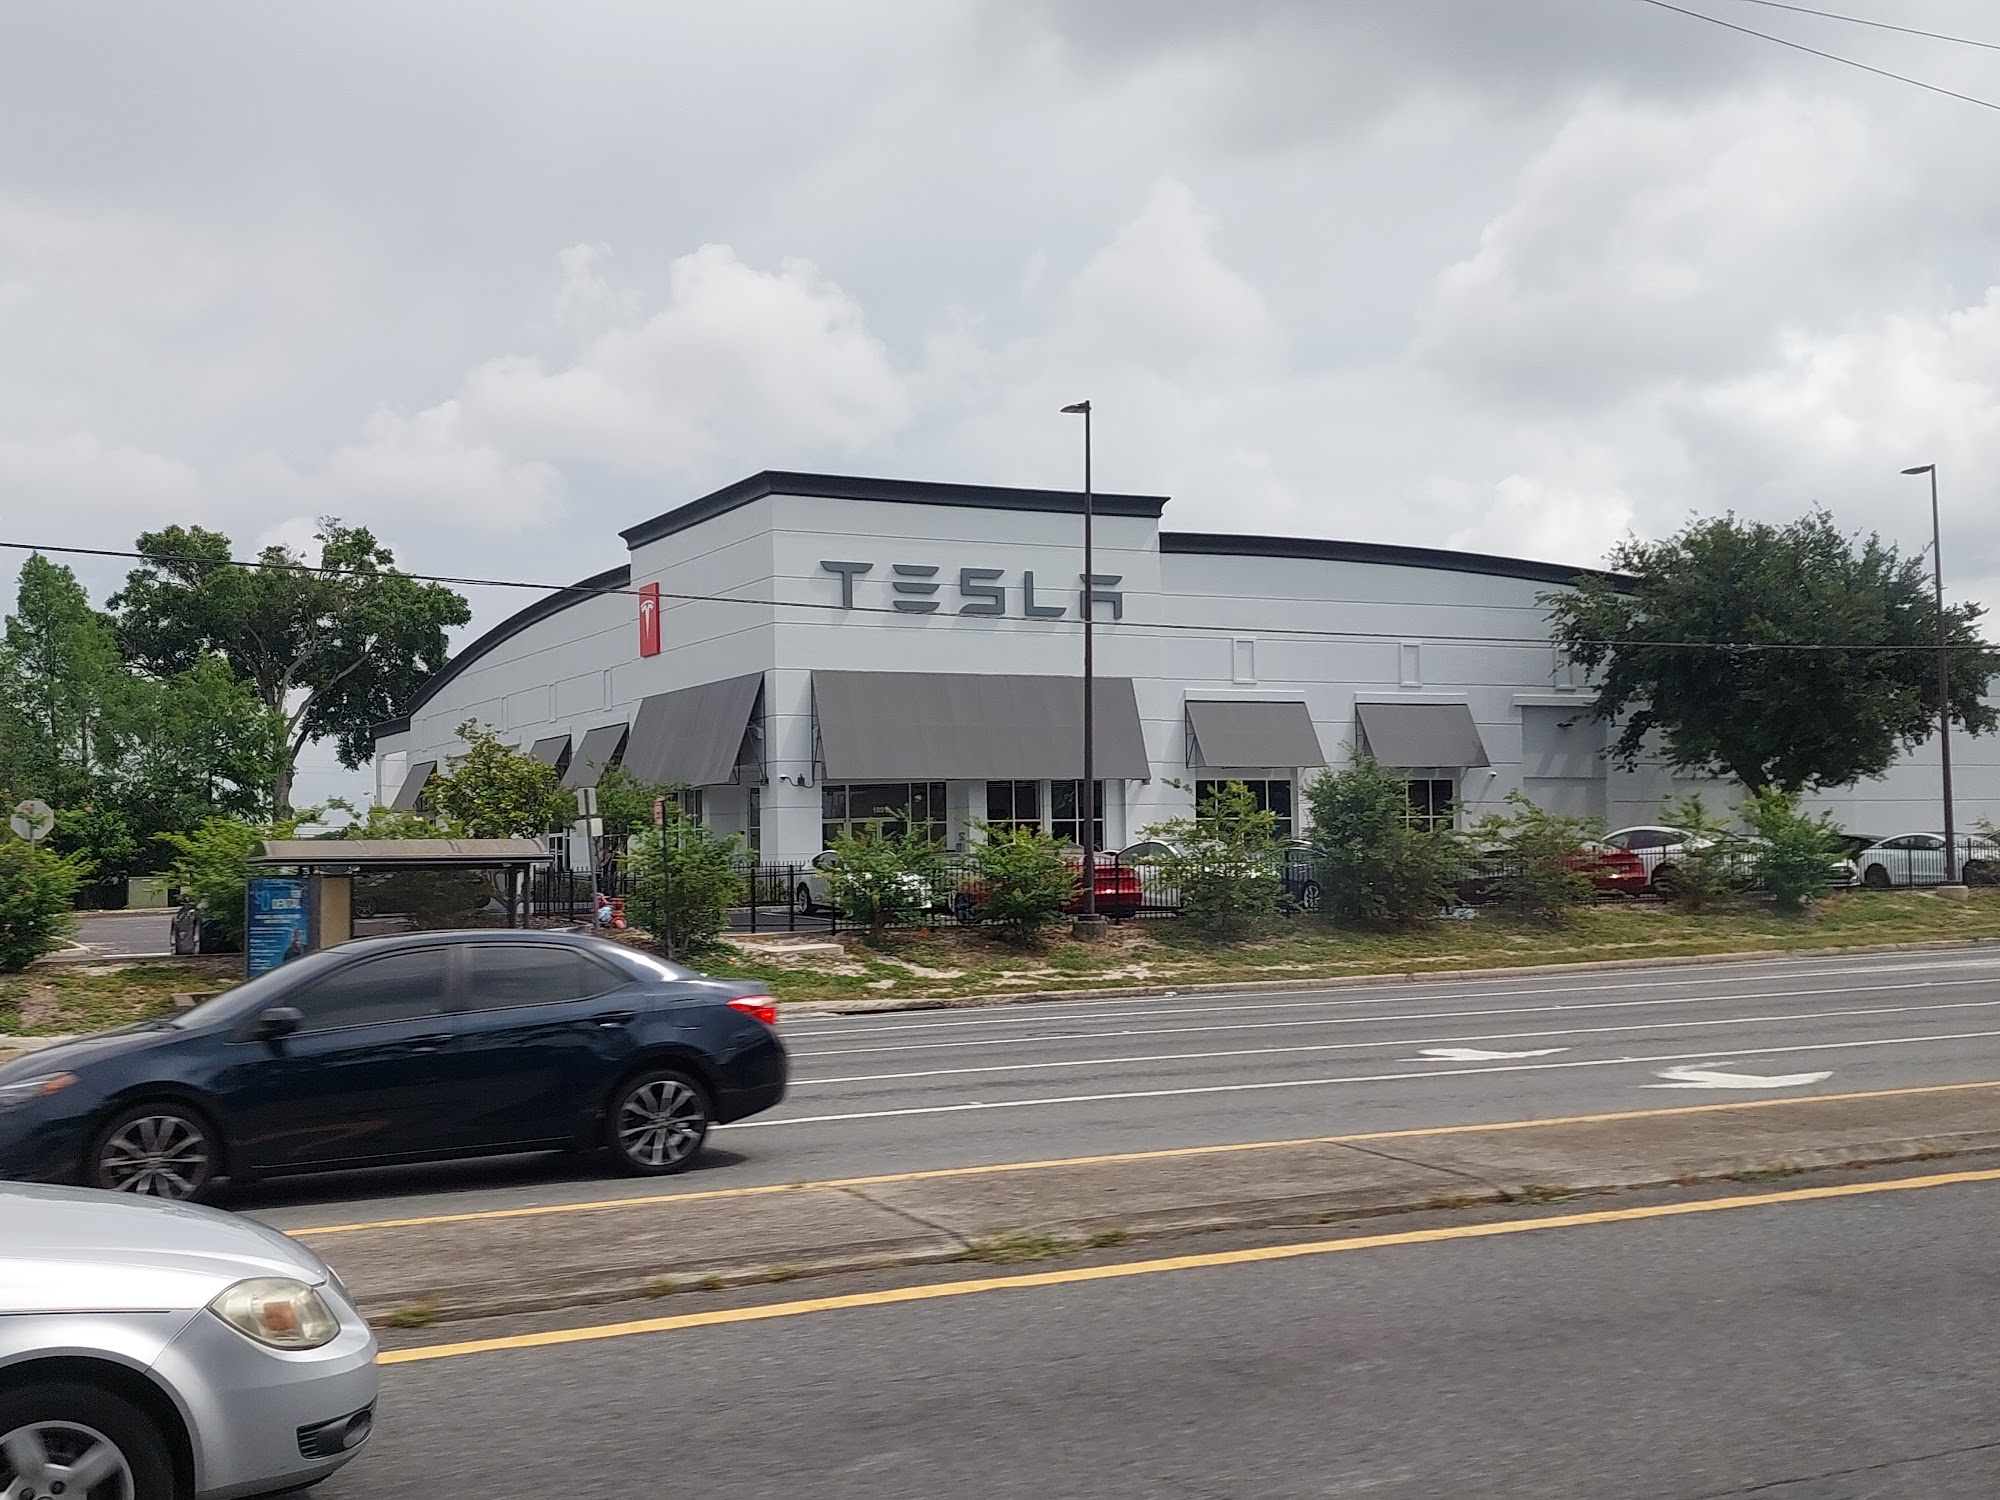 Tesla Collision Orlando